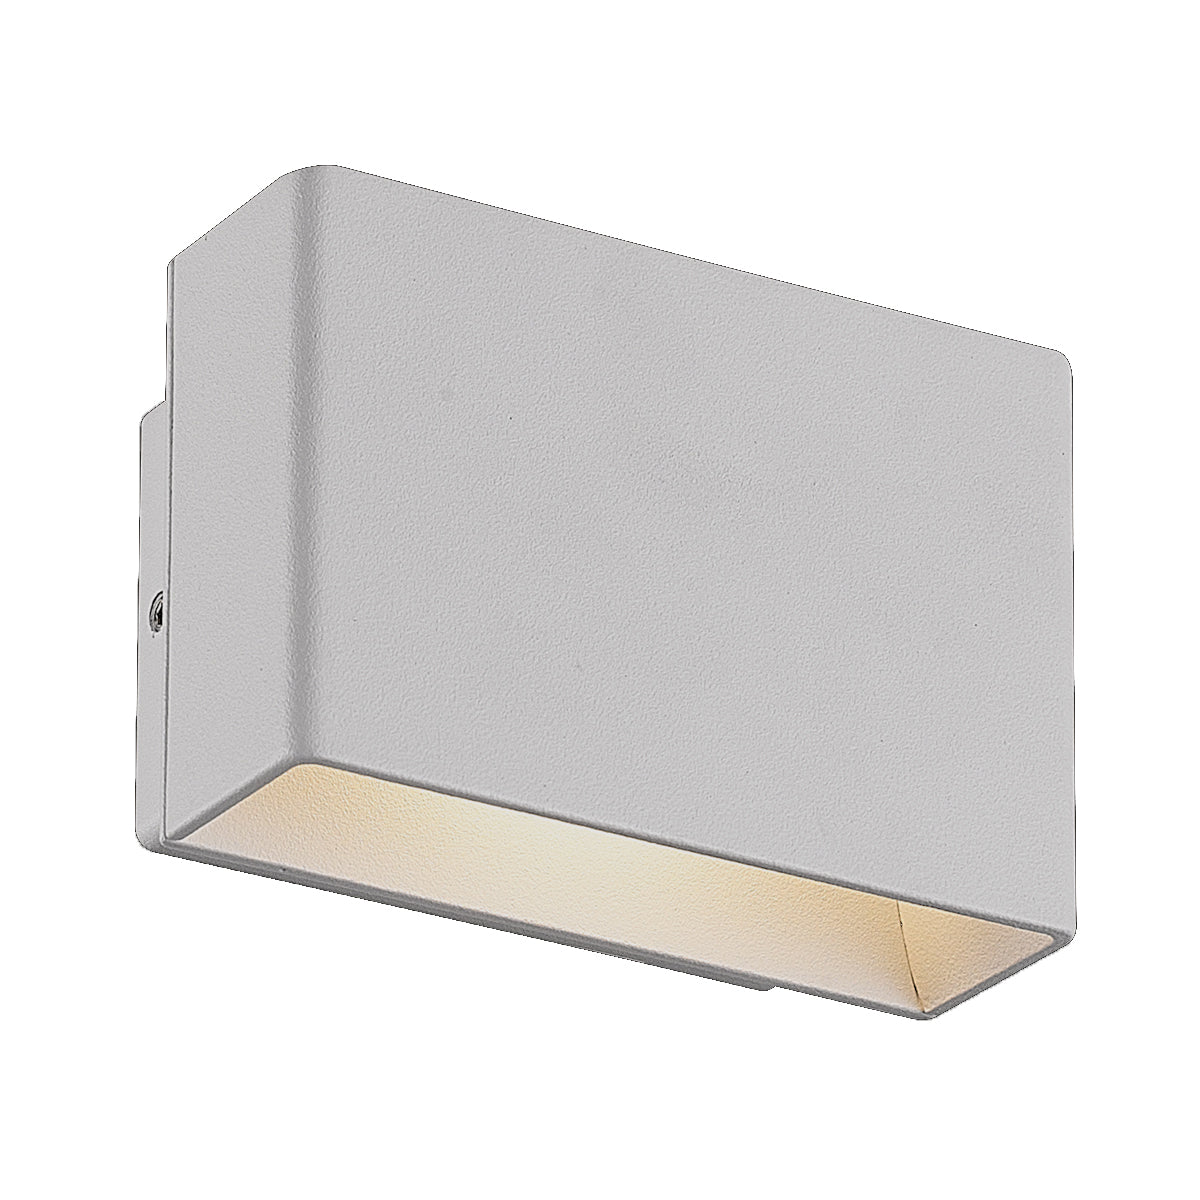 VELLO Outdoor sconce Aluminum - 28282-013 INTEGRATED LED | EUROFASE